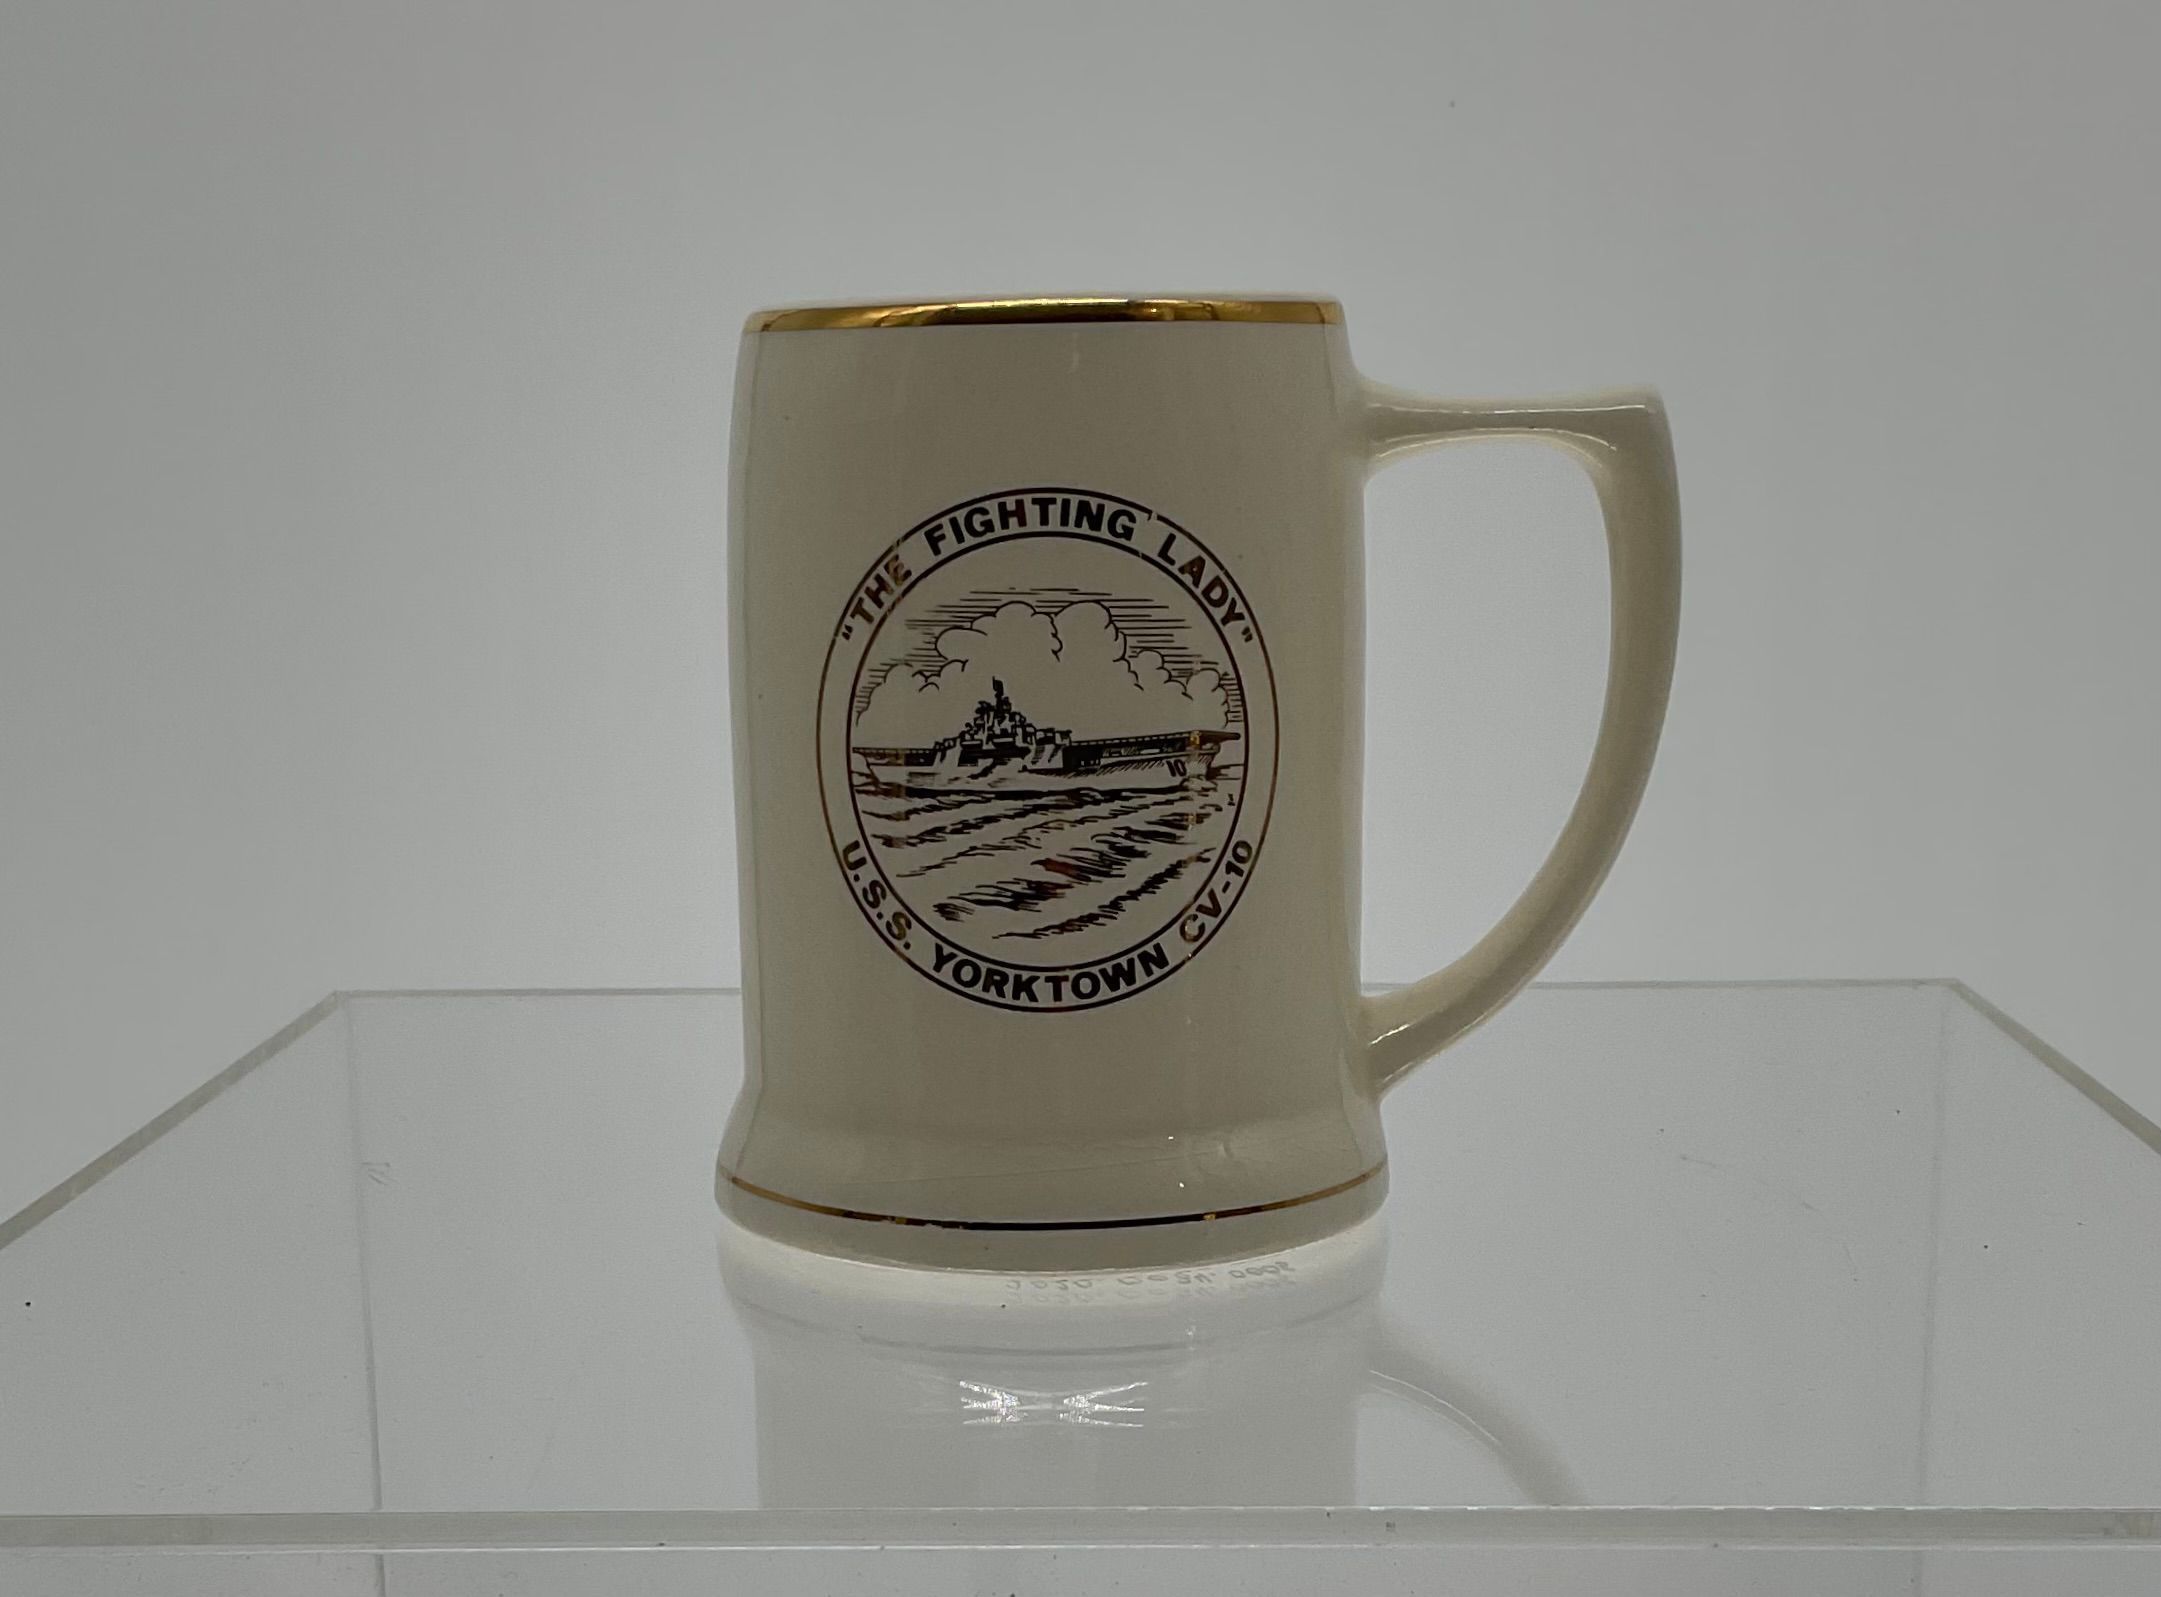 Primary Image of USS Yorktown (CV-10) Commemorative Mug